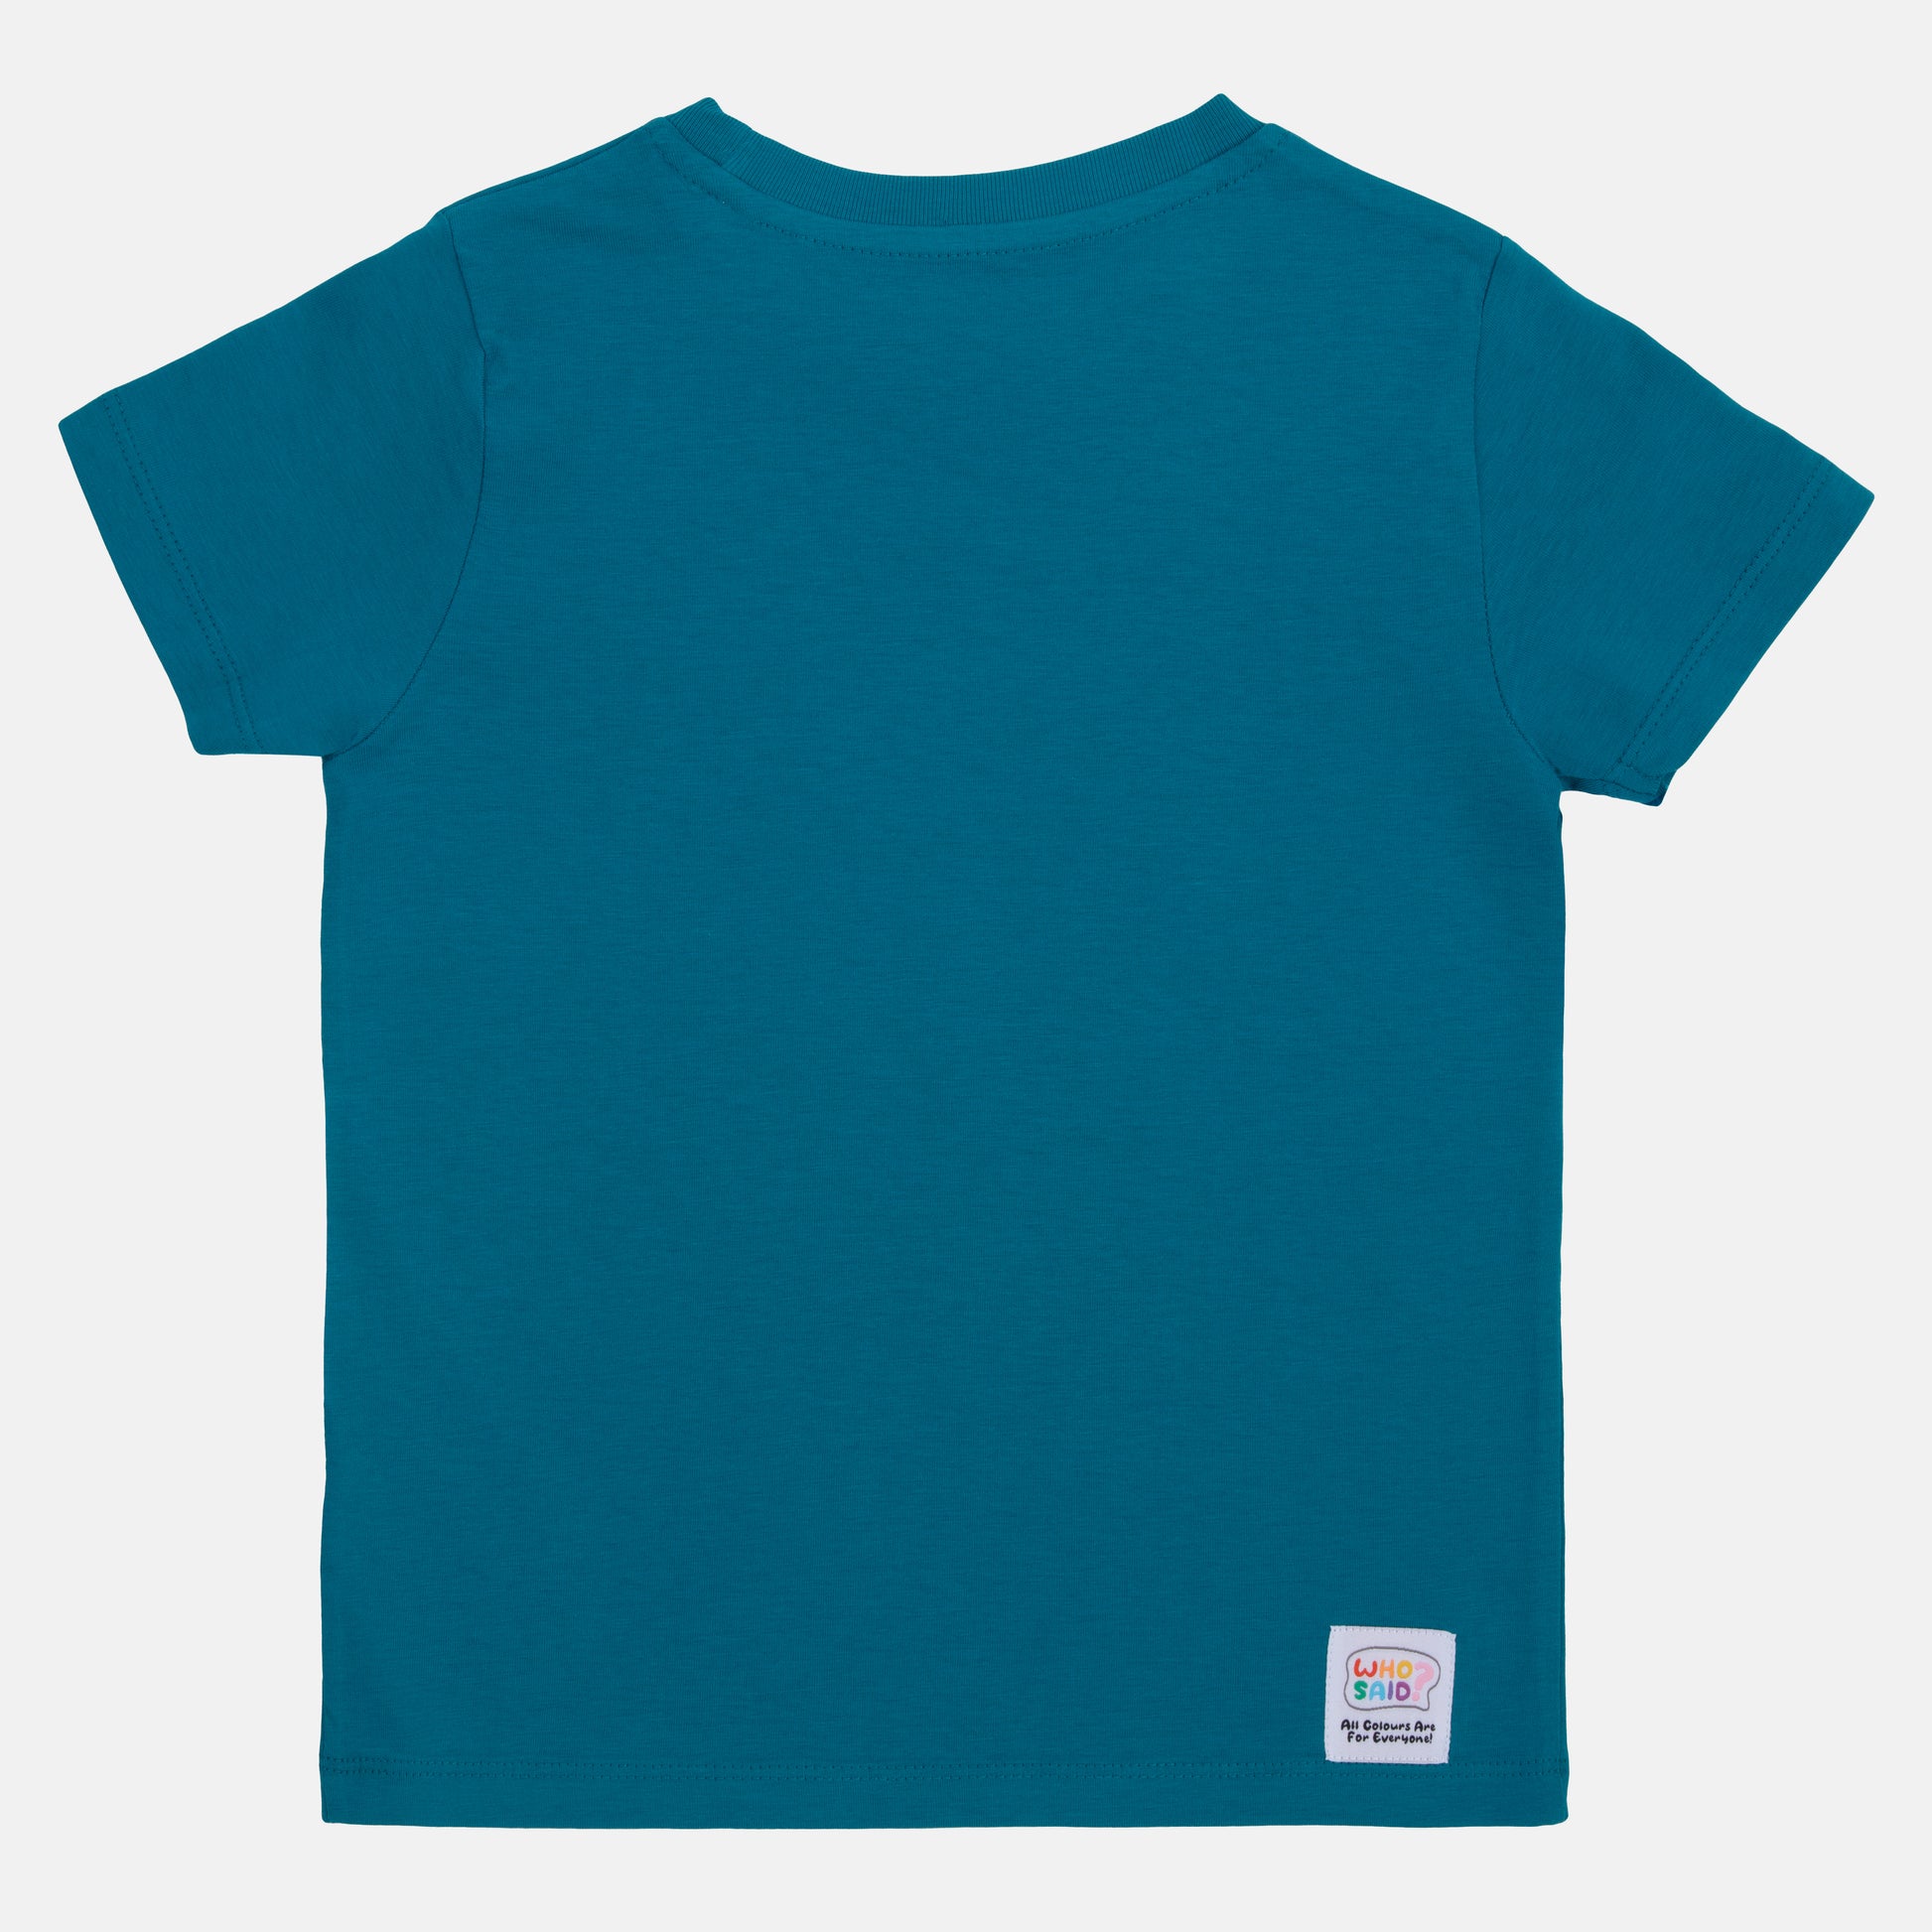 Who said nachhaltiges T-Shirt in Petrolbau mit Meerjungfrau